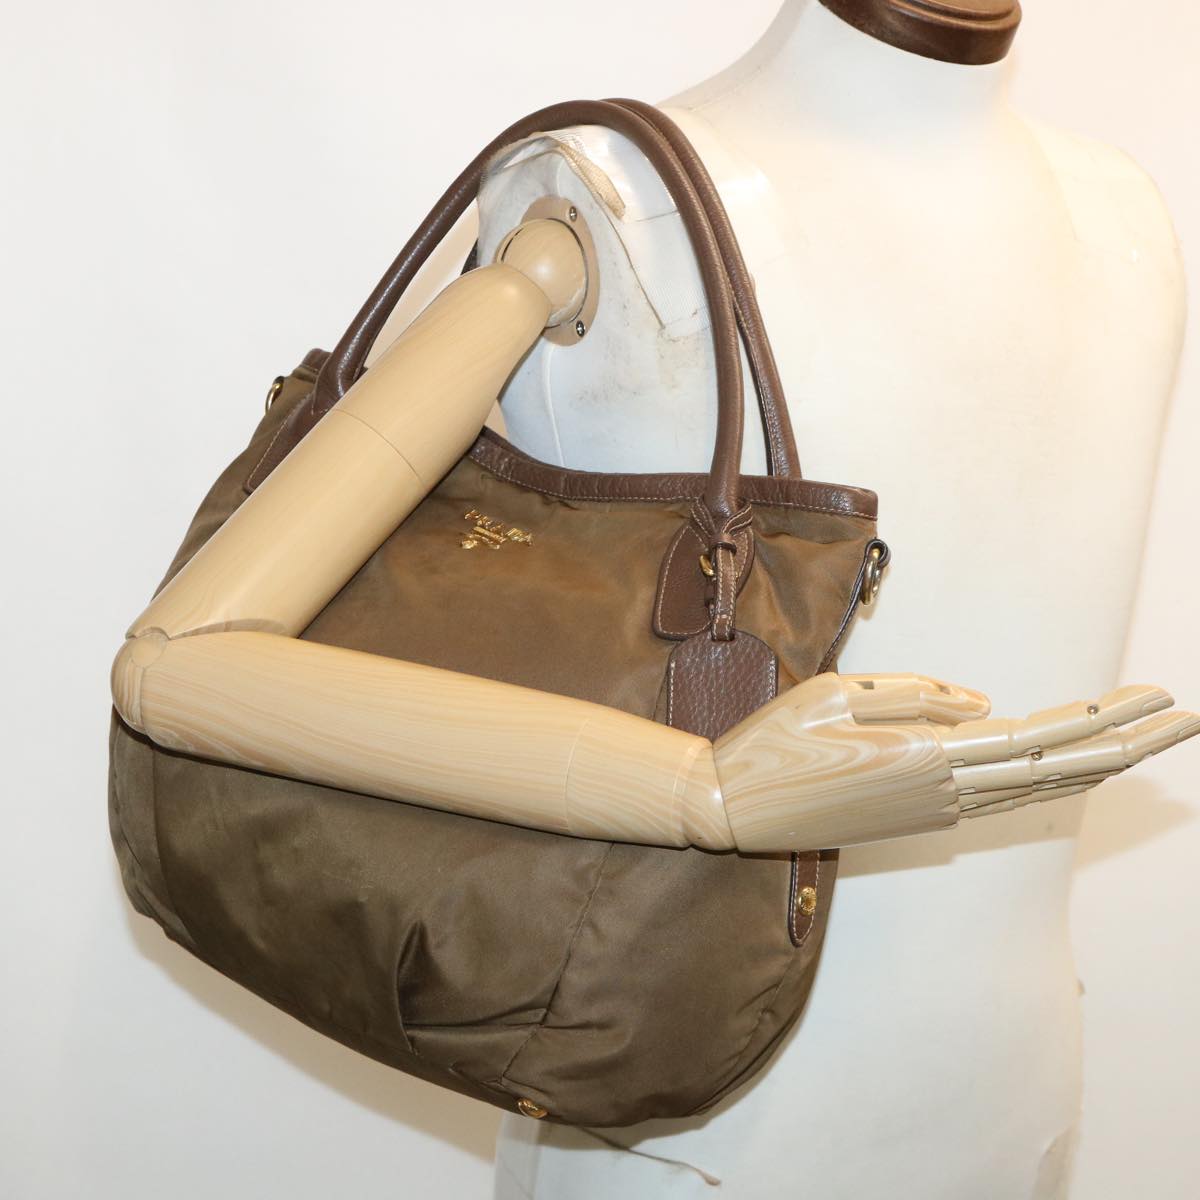 PRADA Hand Bag Nylon Leather Brown Auth cl190